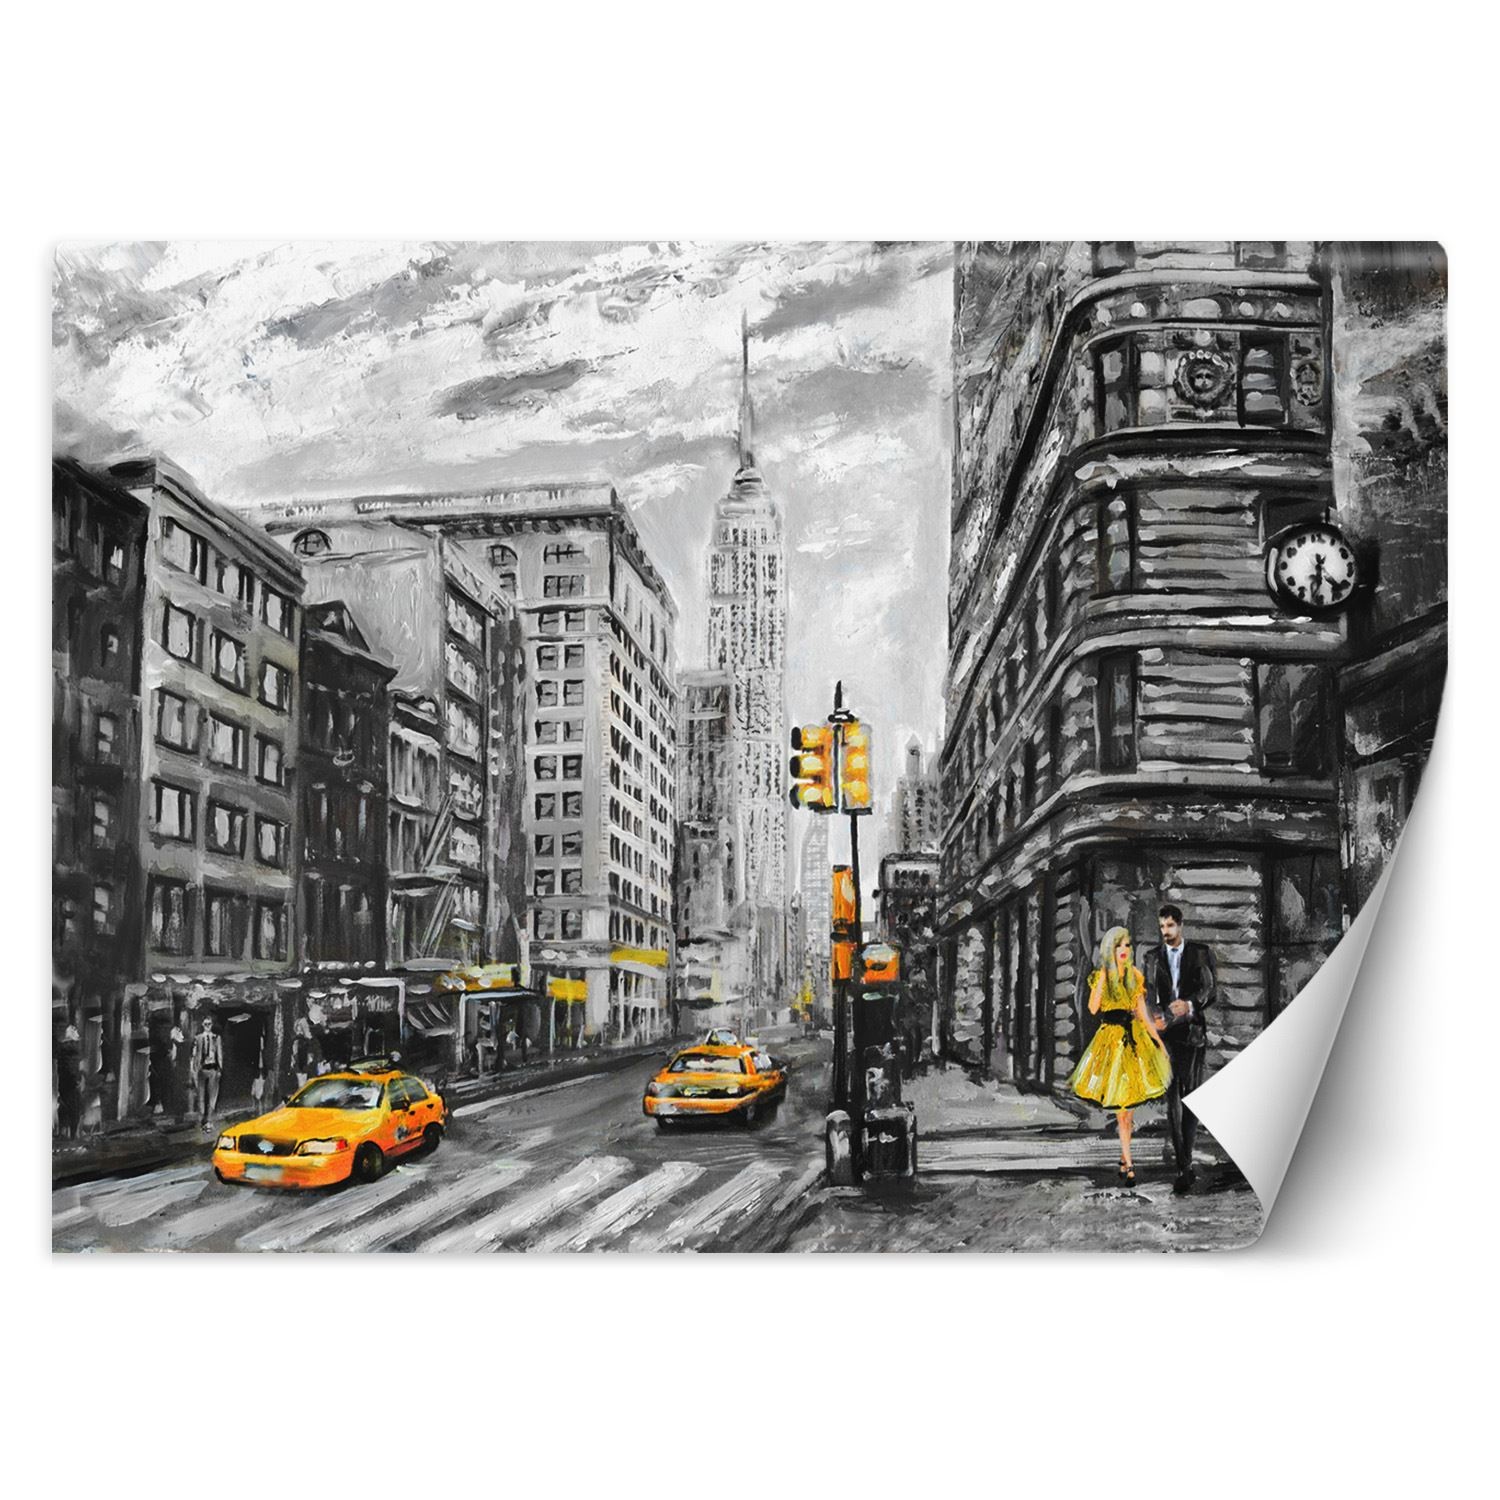 Trend24 – Behang – New York Taxi – Behangpapier – Fotobehang – Behang Woonkamer – 450x315x2 cm – Incl. behanglijm